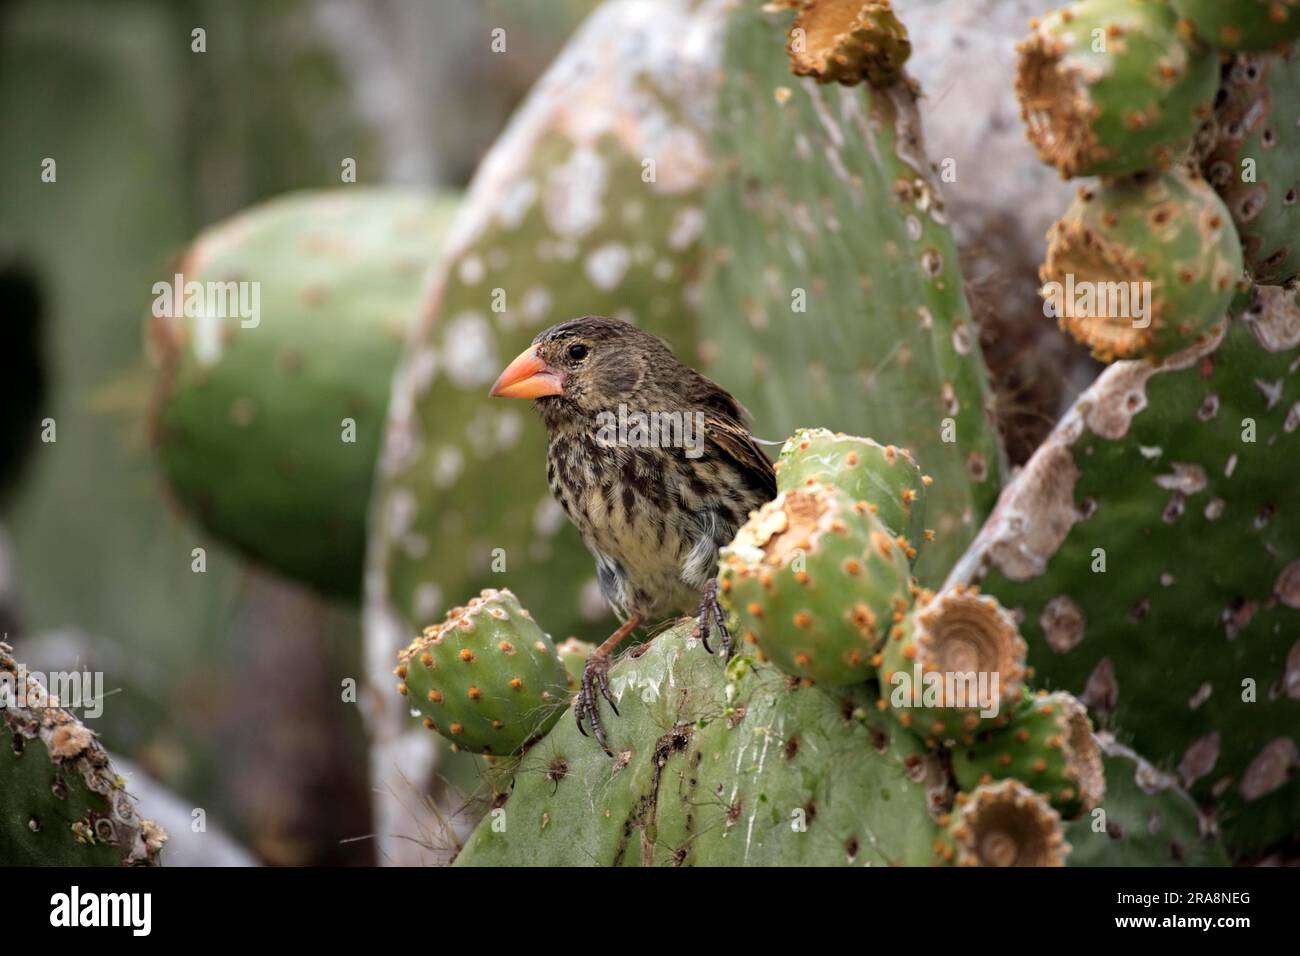 Medium ground finch (Geospiza fortis), Galapagos Islands, Ecuador Stock Photo